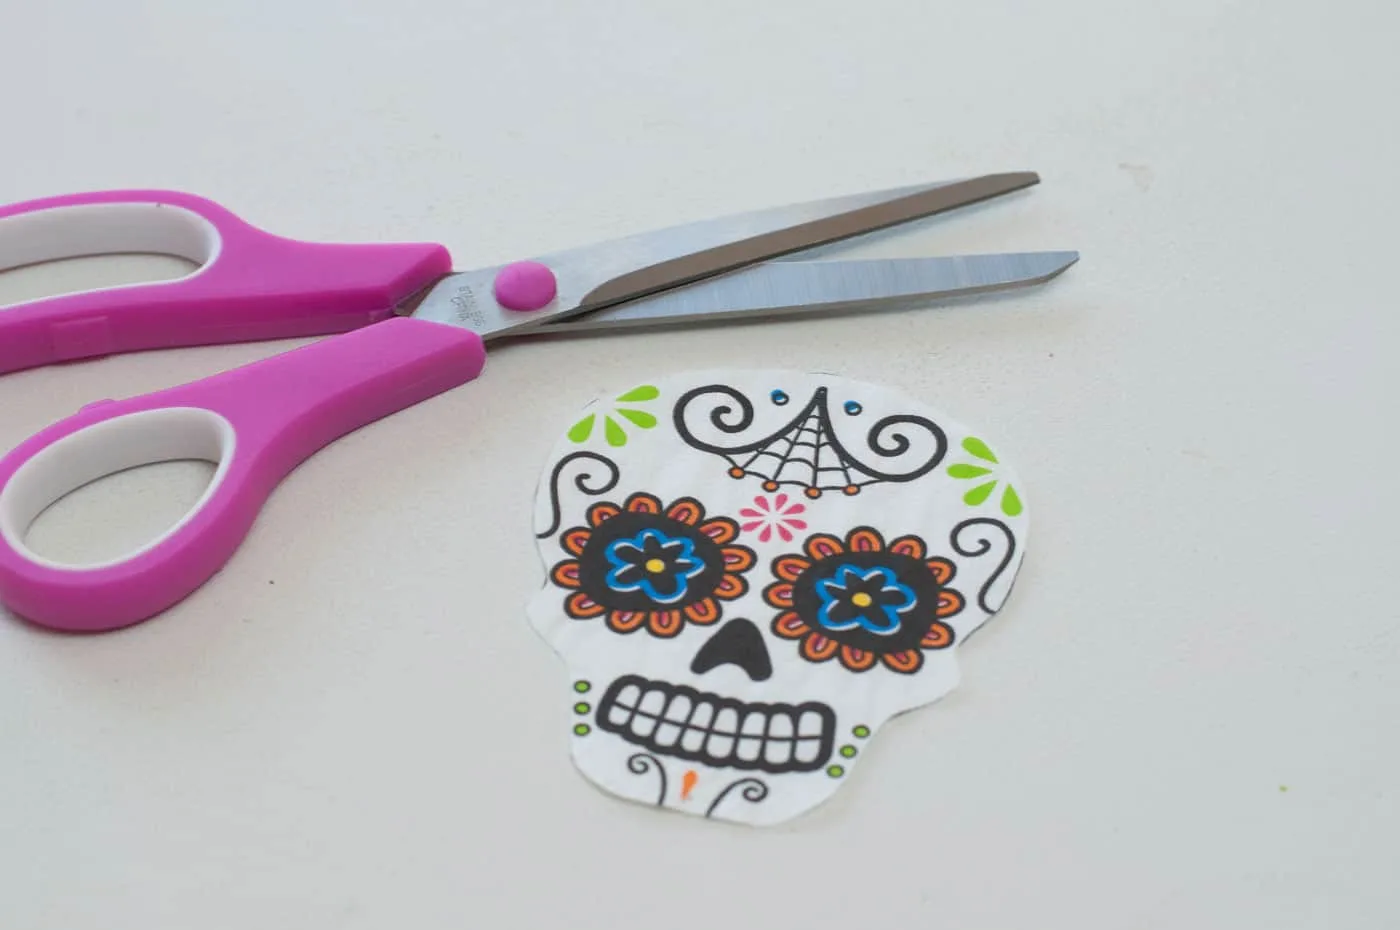 Calaveras skull design cut out of napkins and pair of scissors 